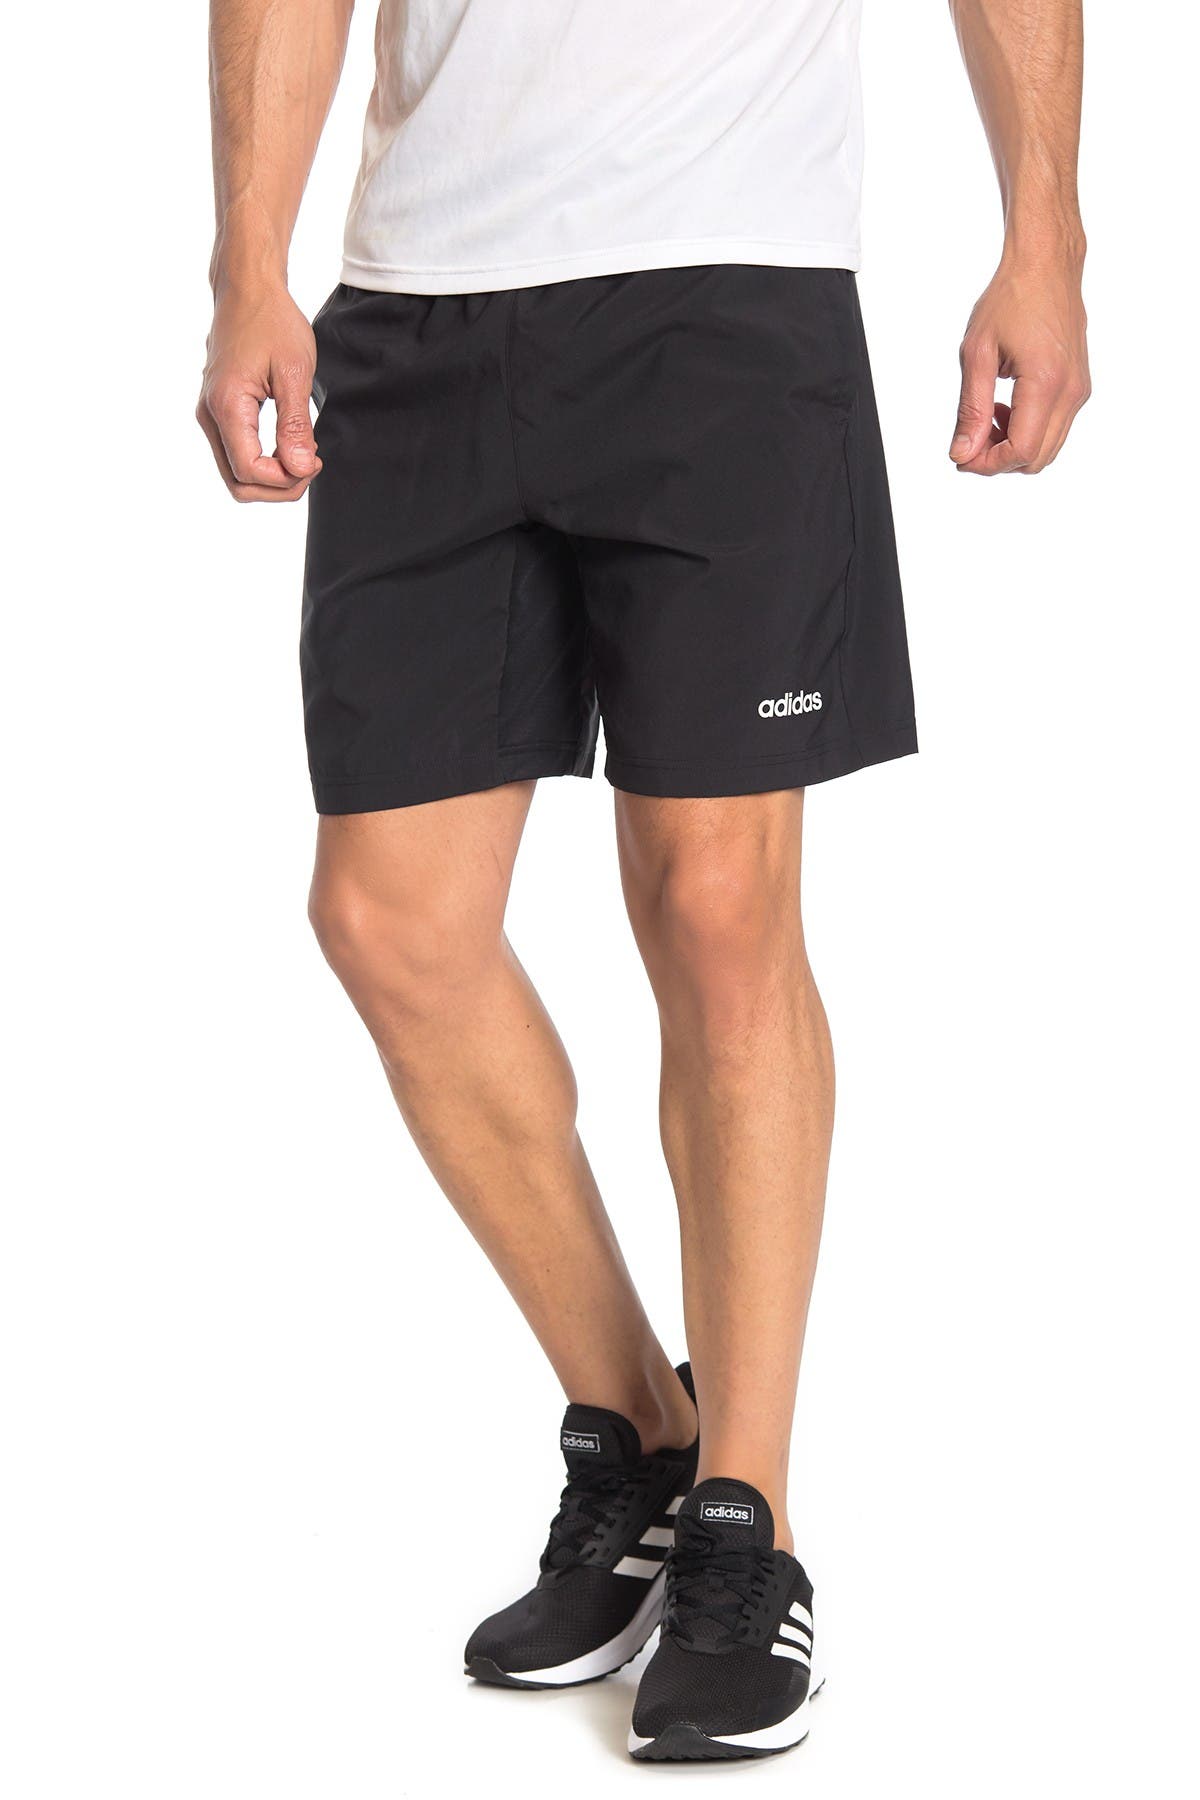 climacool shorts adidas 40